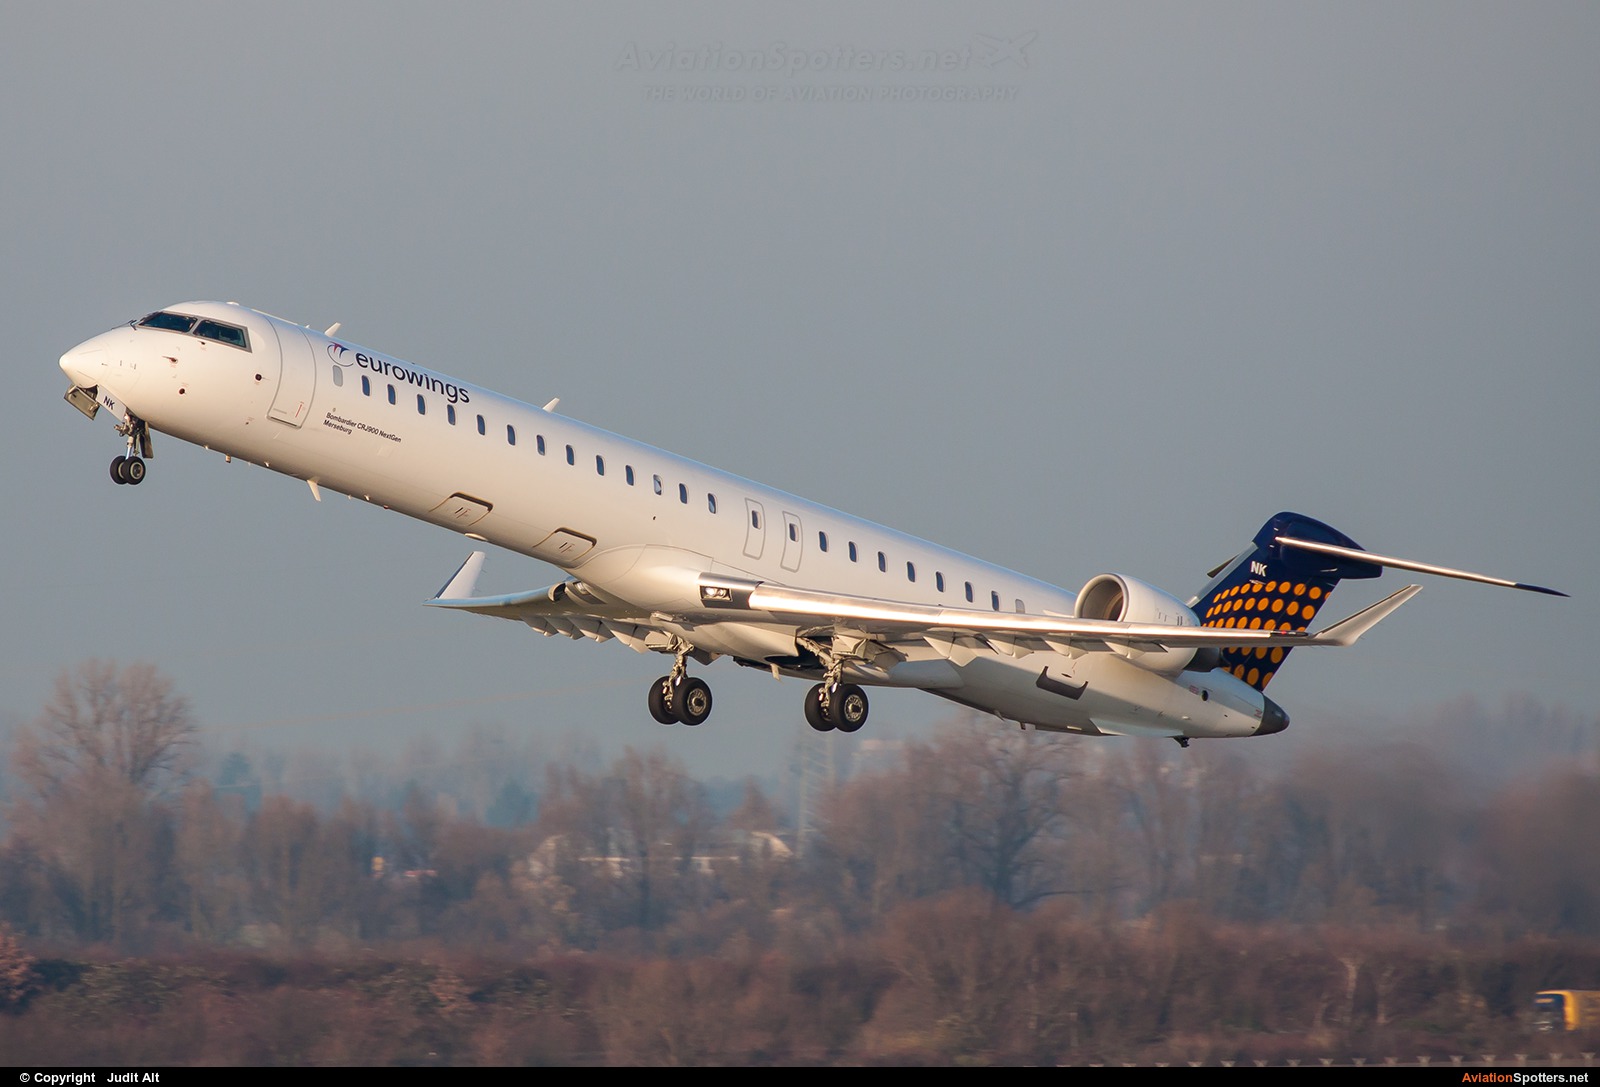 Eurowings - Lufthansa Regional  -  CL-600 Regional Jet CRJ-900  (D-ACNK) By Judit Alt (Judit)